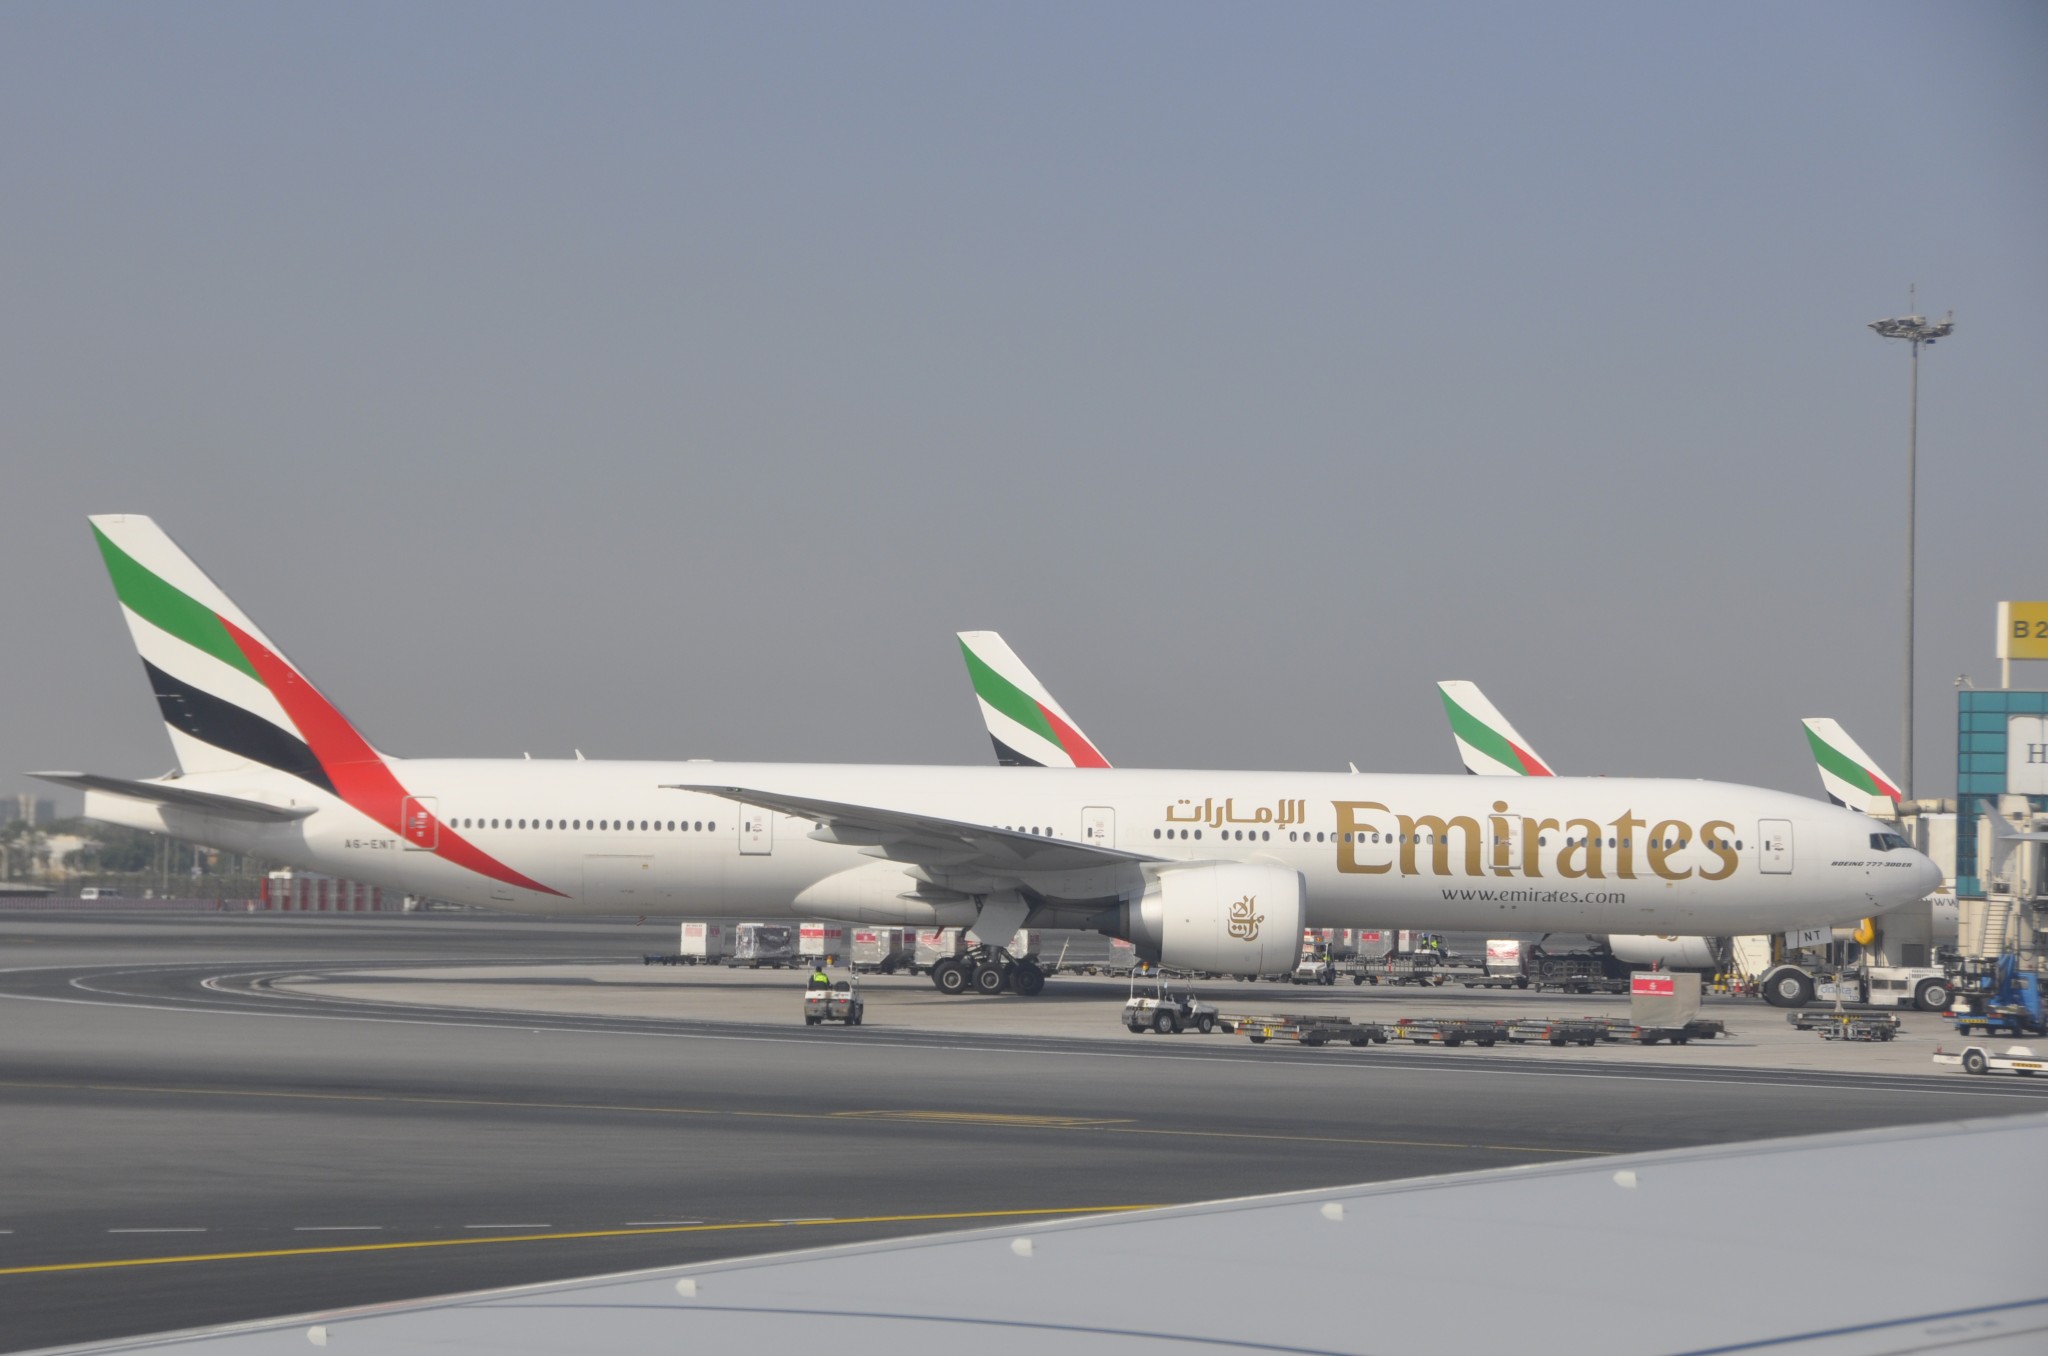 Emirates to operate additional flight to London Gatwick